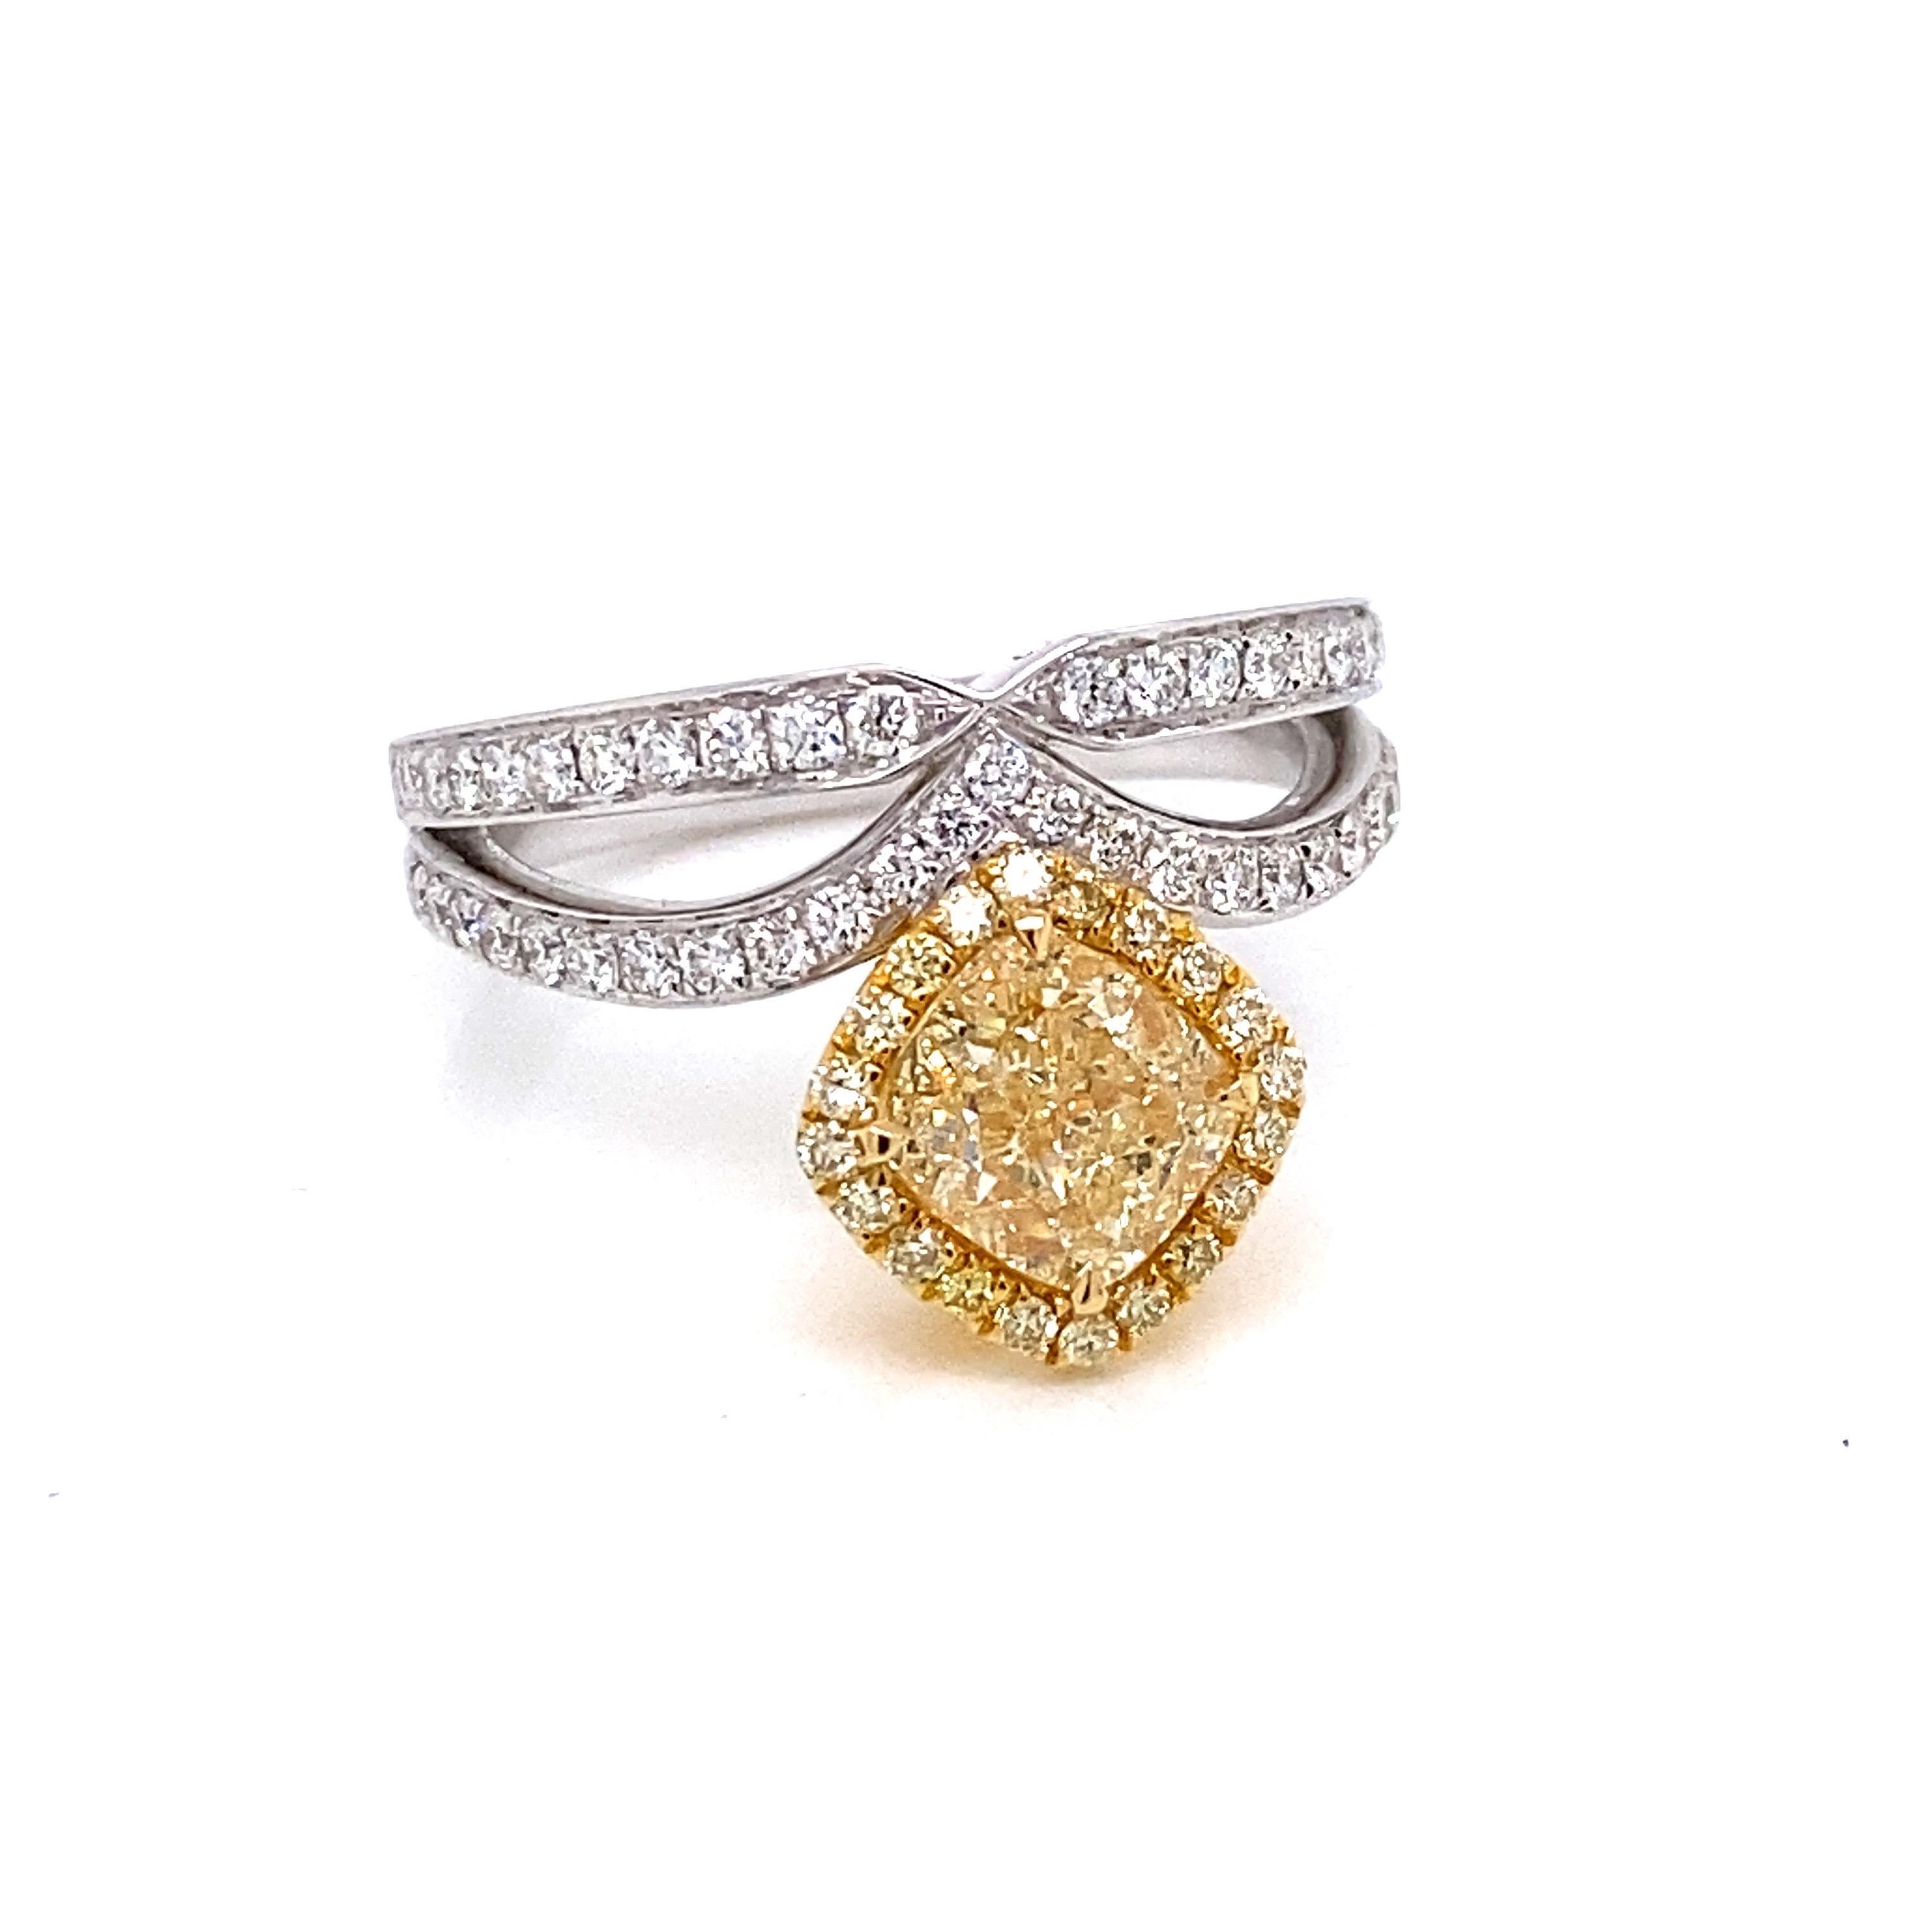 Cushion Cut Emilio Jewelry GIA Certified 1.94 Carat Diamond Ring 